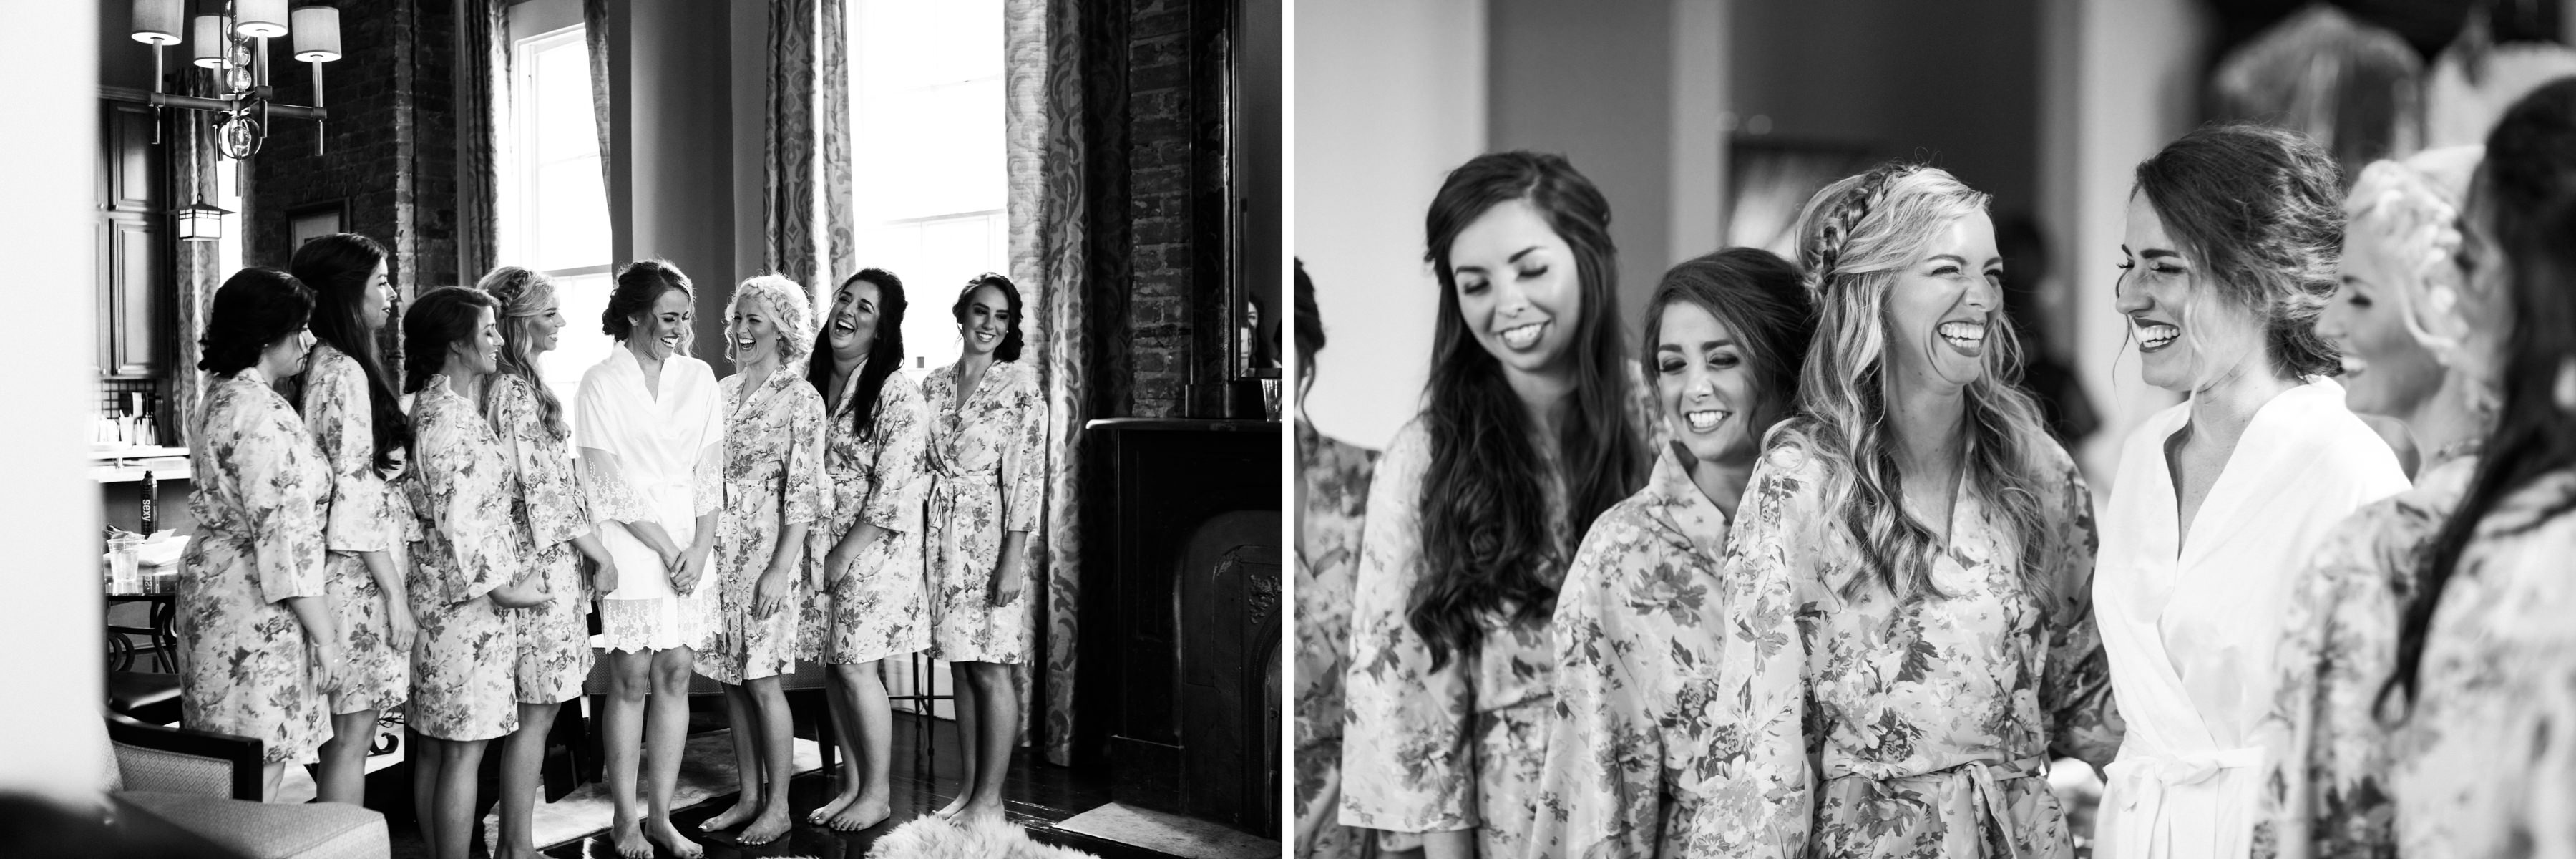 MULLET_WEDDING_NEW_ORLEANS_LOUISIANA_WEDDING_PHOTOGRAPHY_25